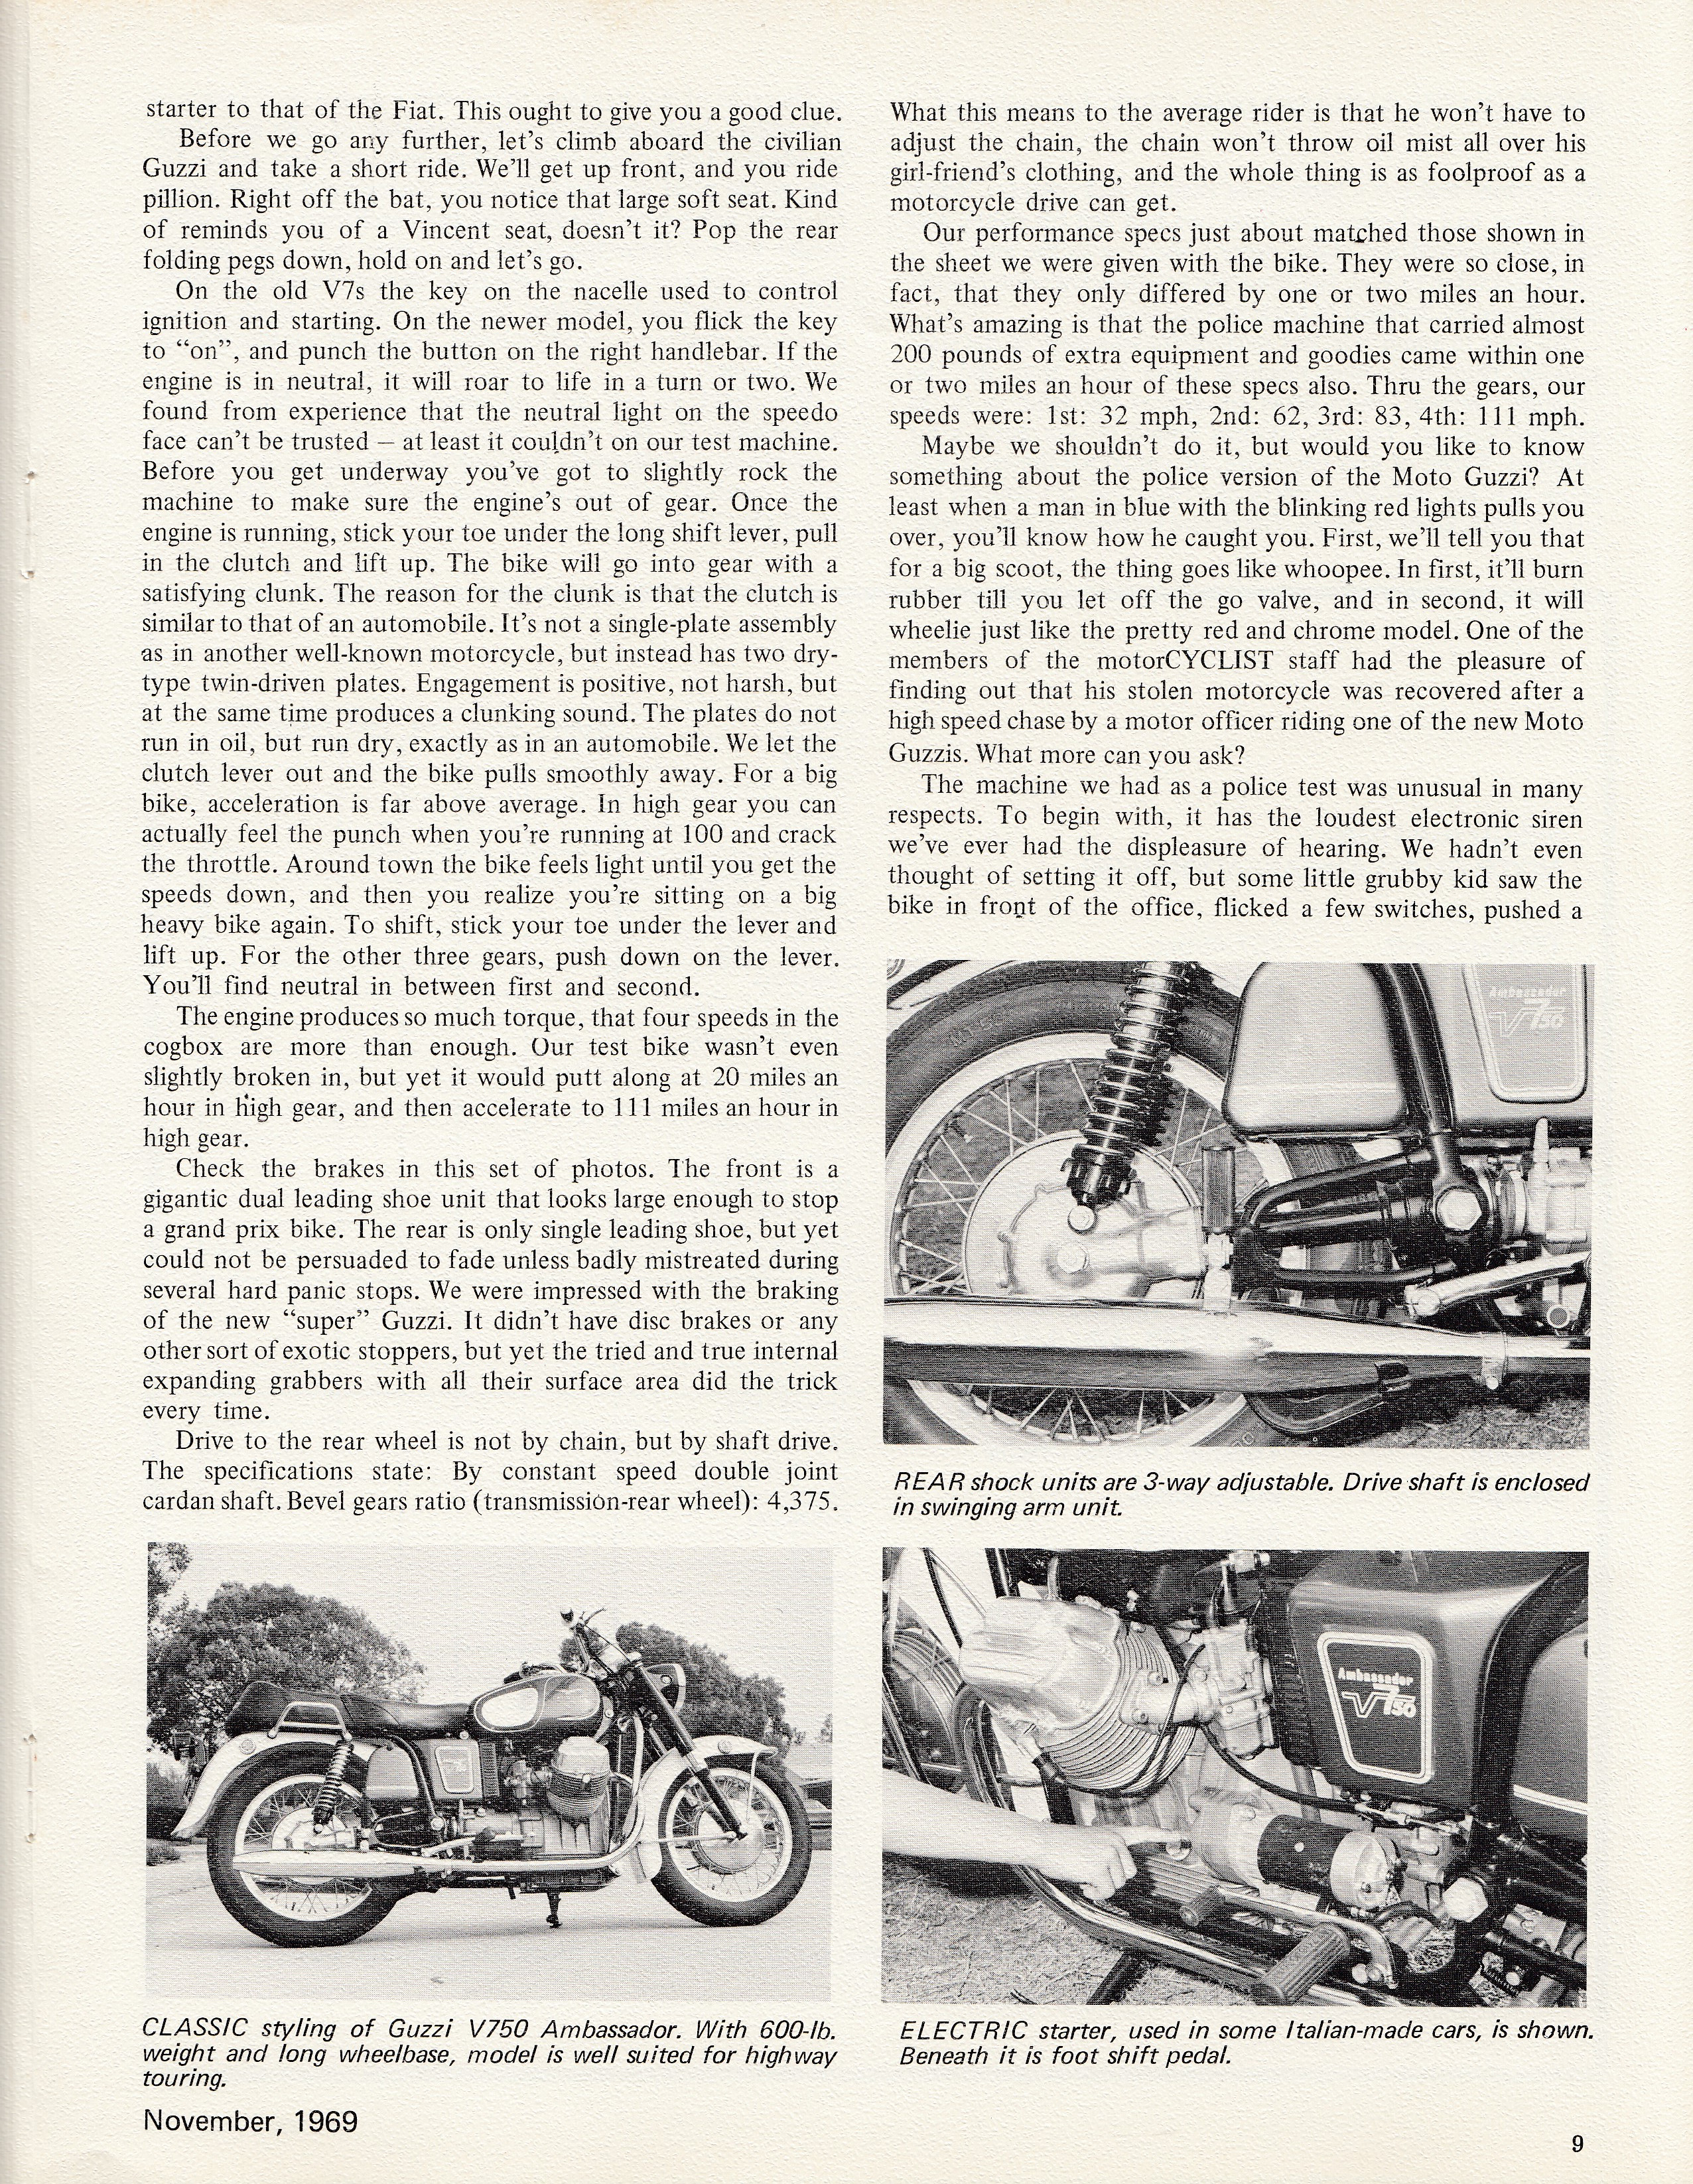 Moto Guzzi Ambassador factory brochure of magazine reviews, Page 8 of 16.